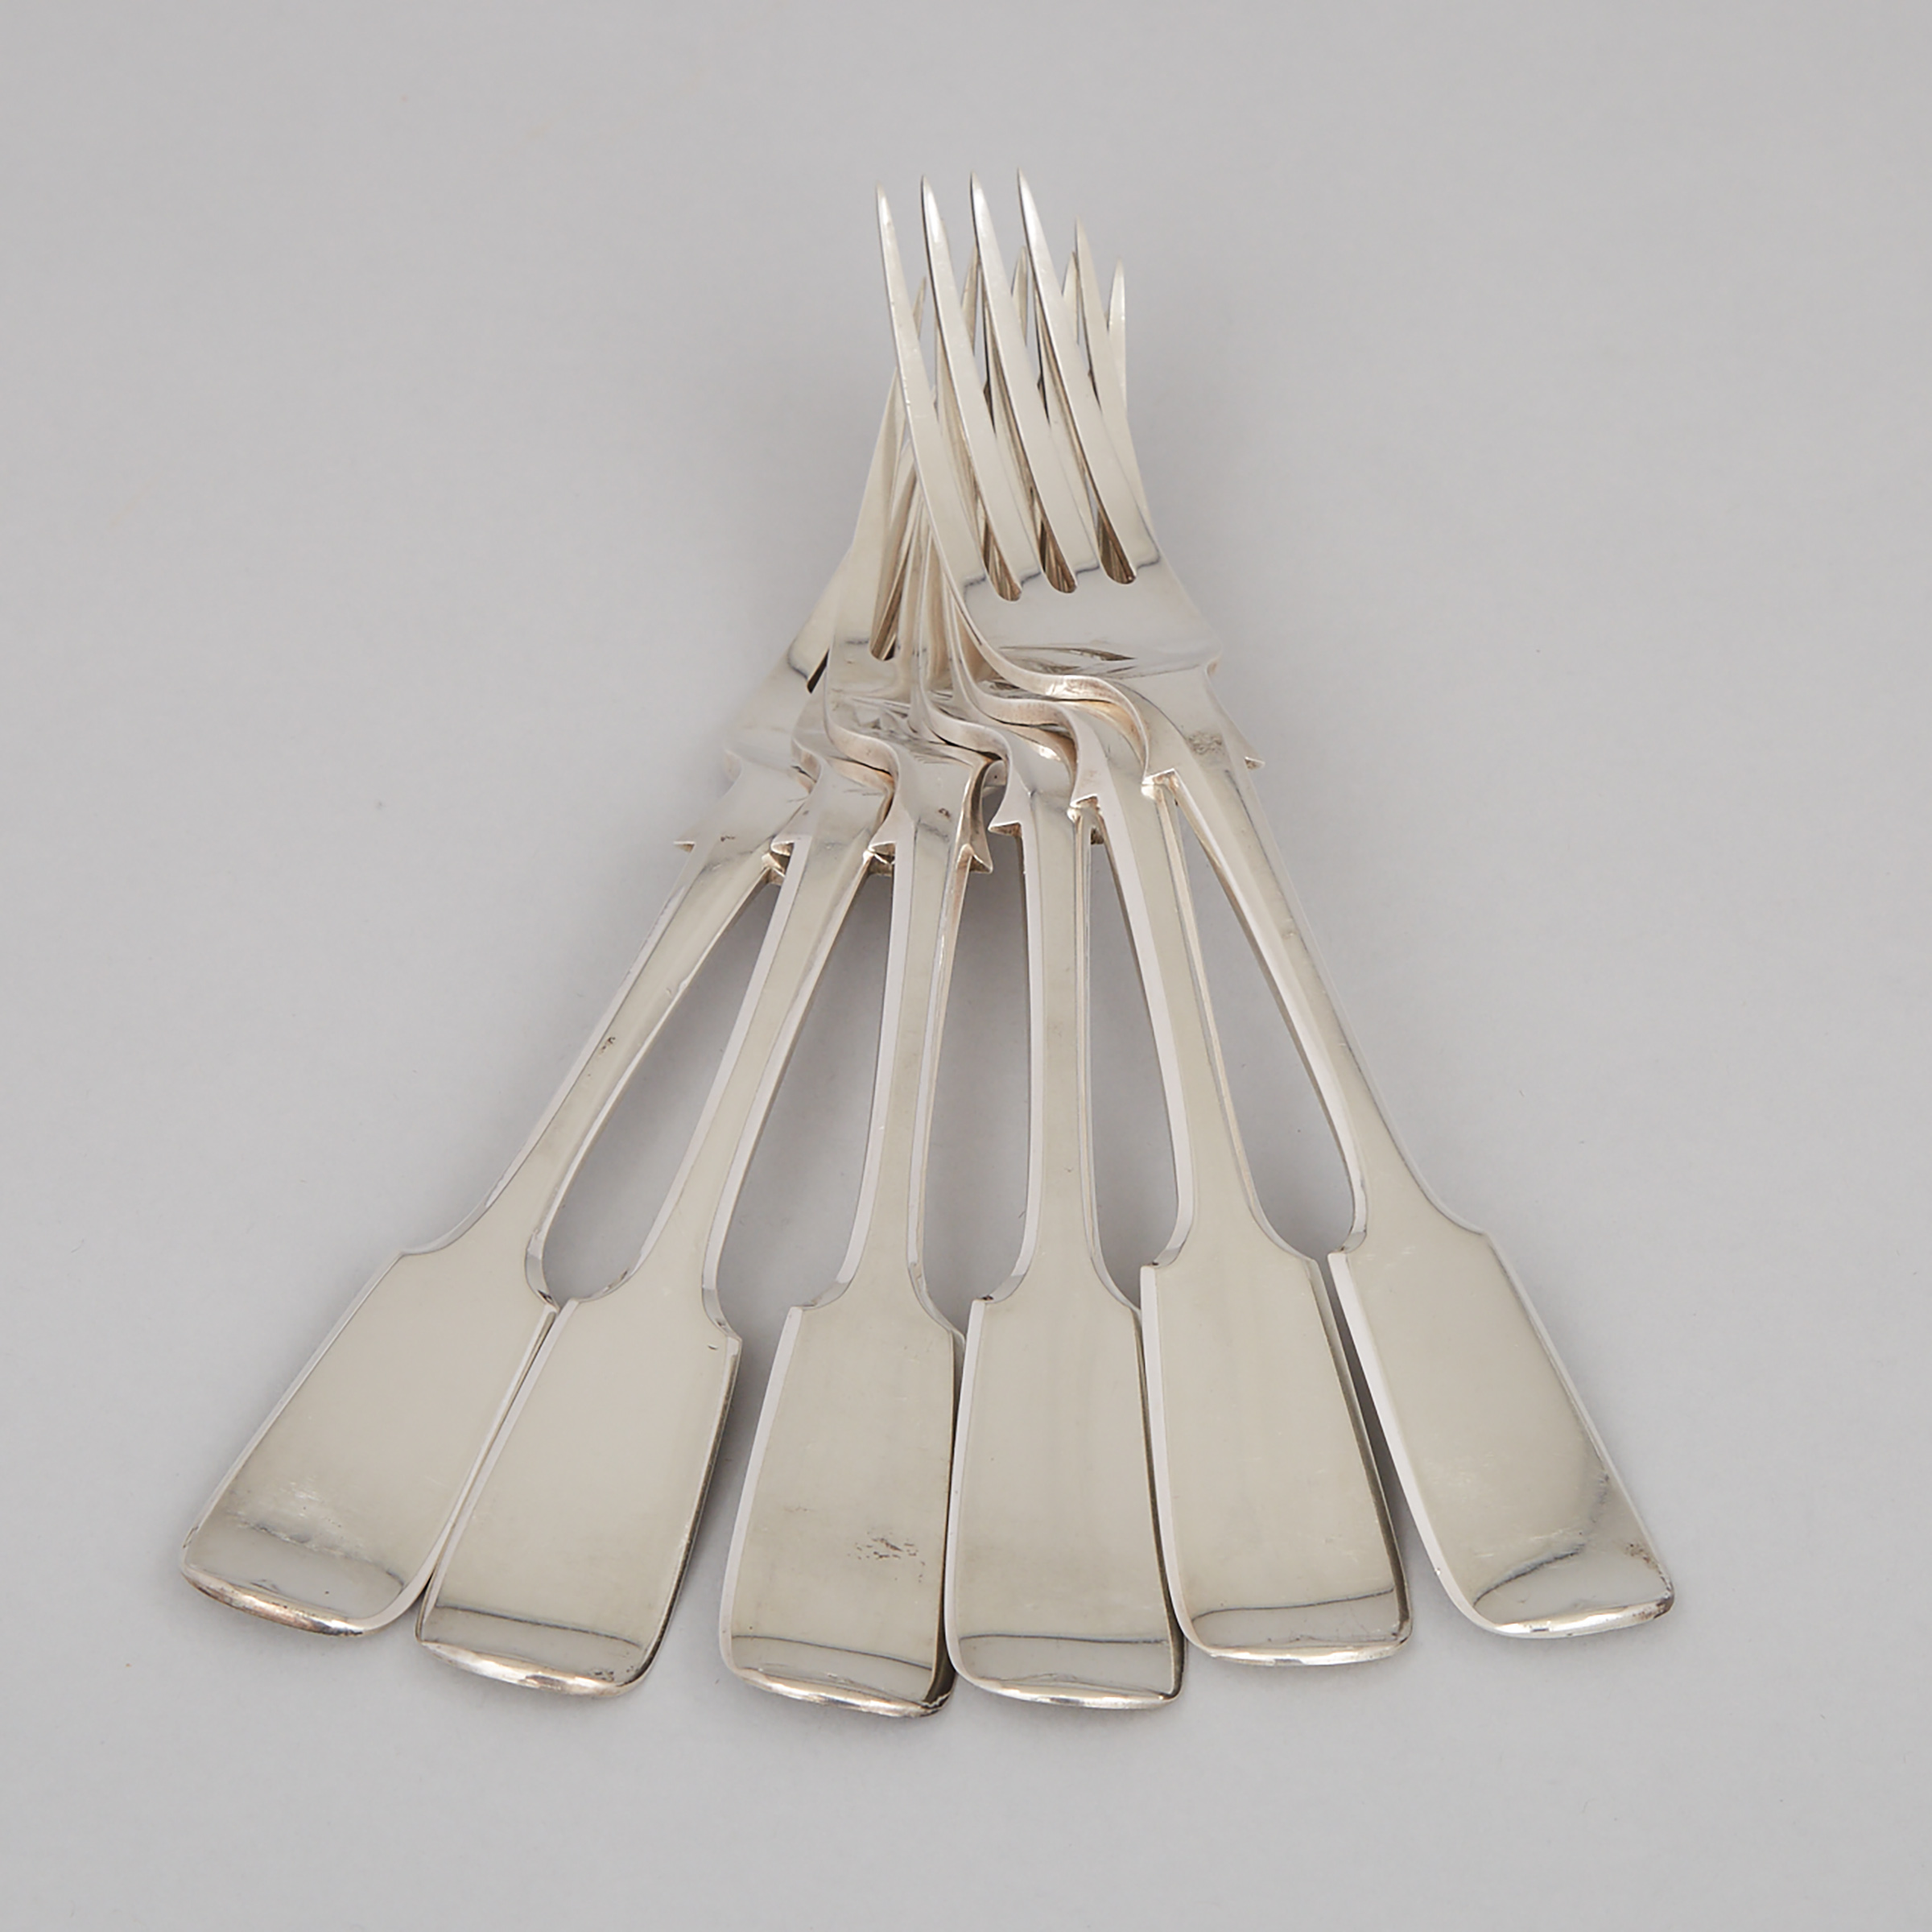 Six Canadian Silver Fiddle Pattern Table Forks, James Burns, Saint John, New Brunswick, c.1850